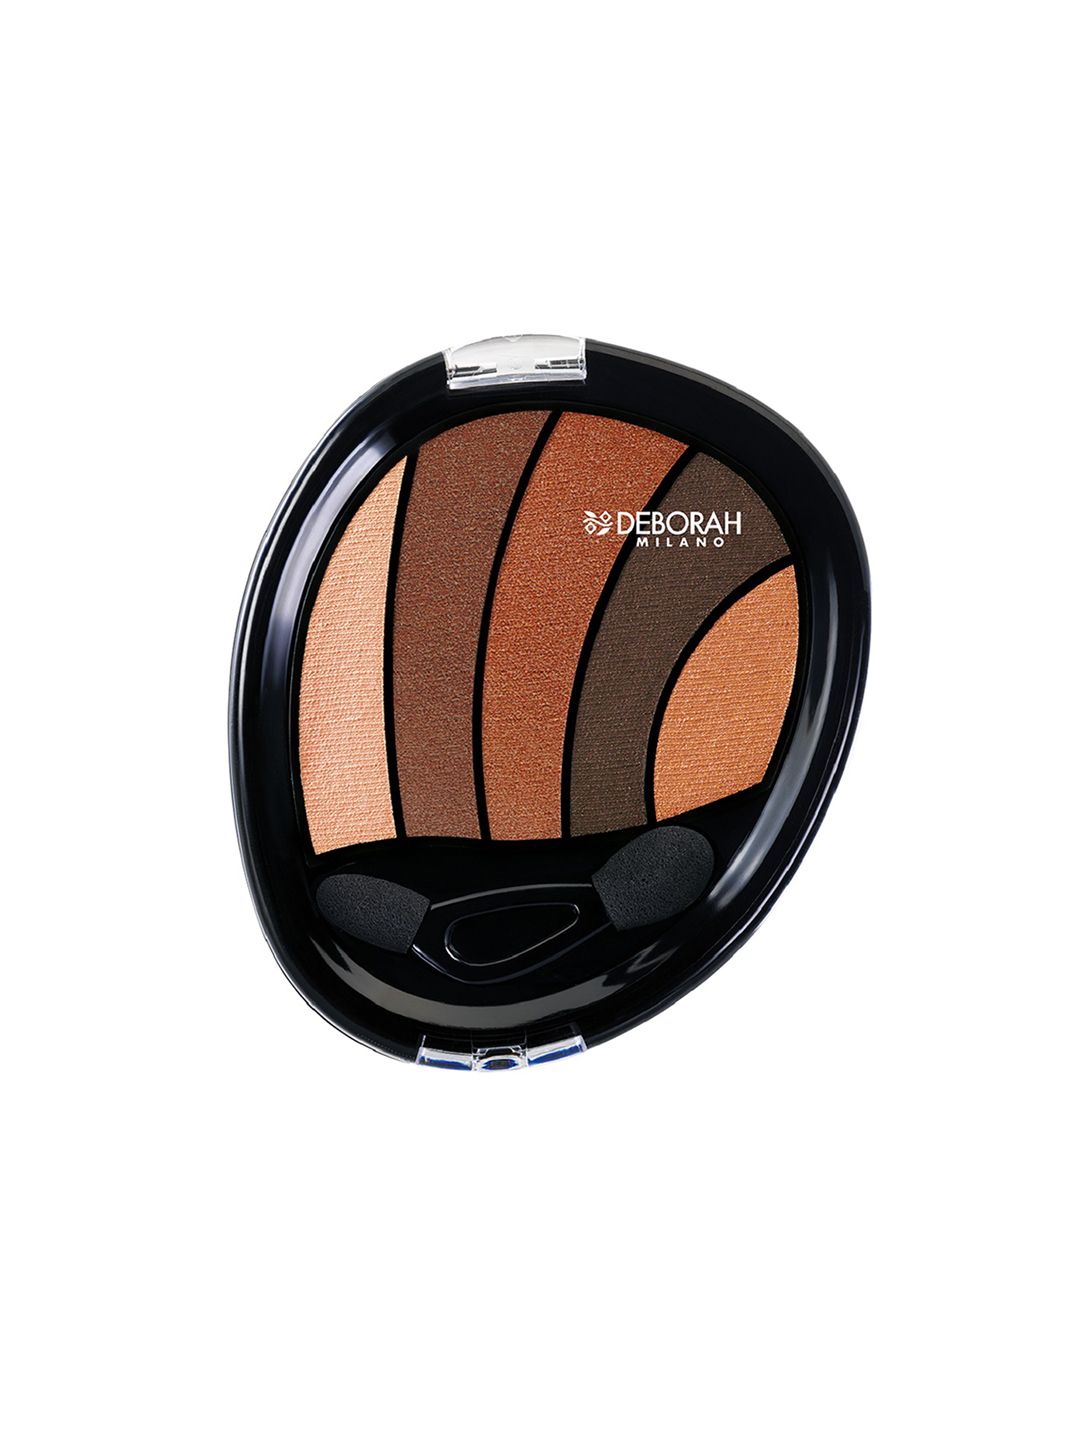 Deborah Milano Perfect Smokey Eye Bronze Eyeshadow Palette 01 Price in India